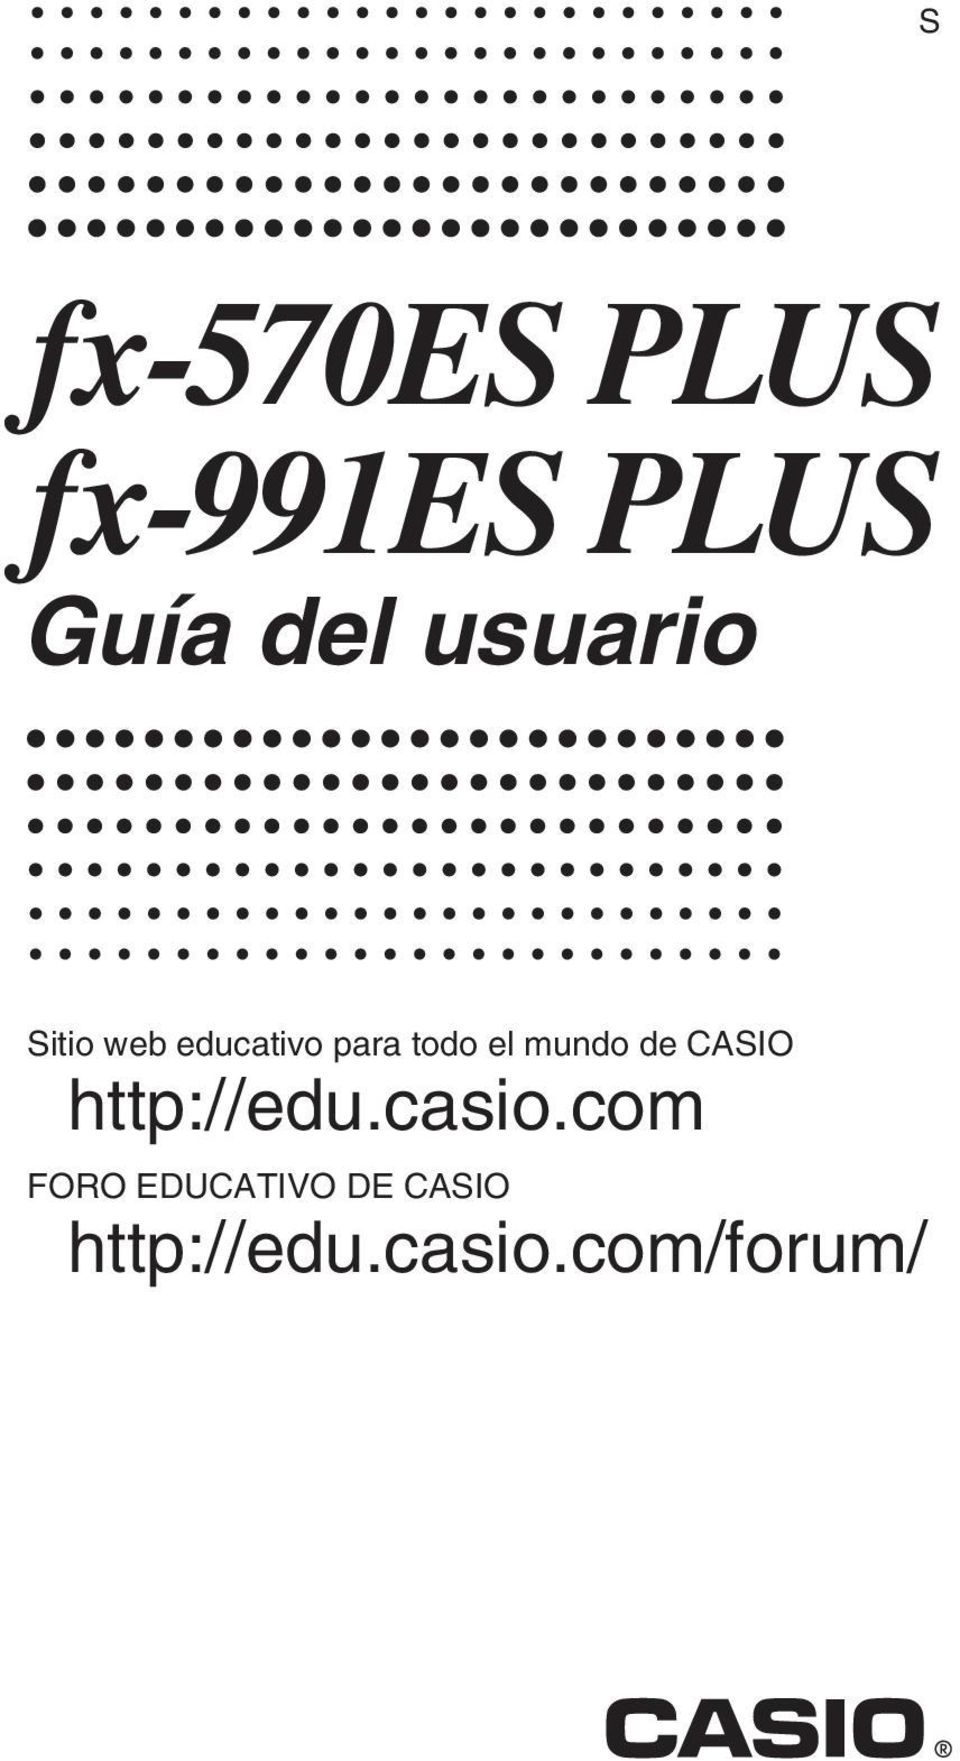 mundo de CASIO http://edu.casio.